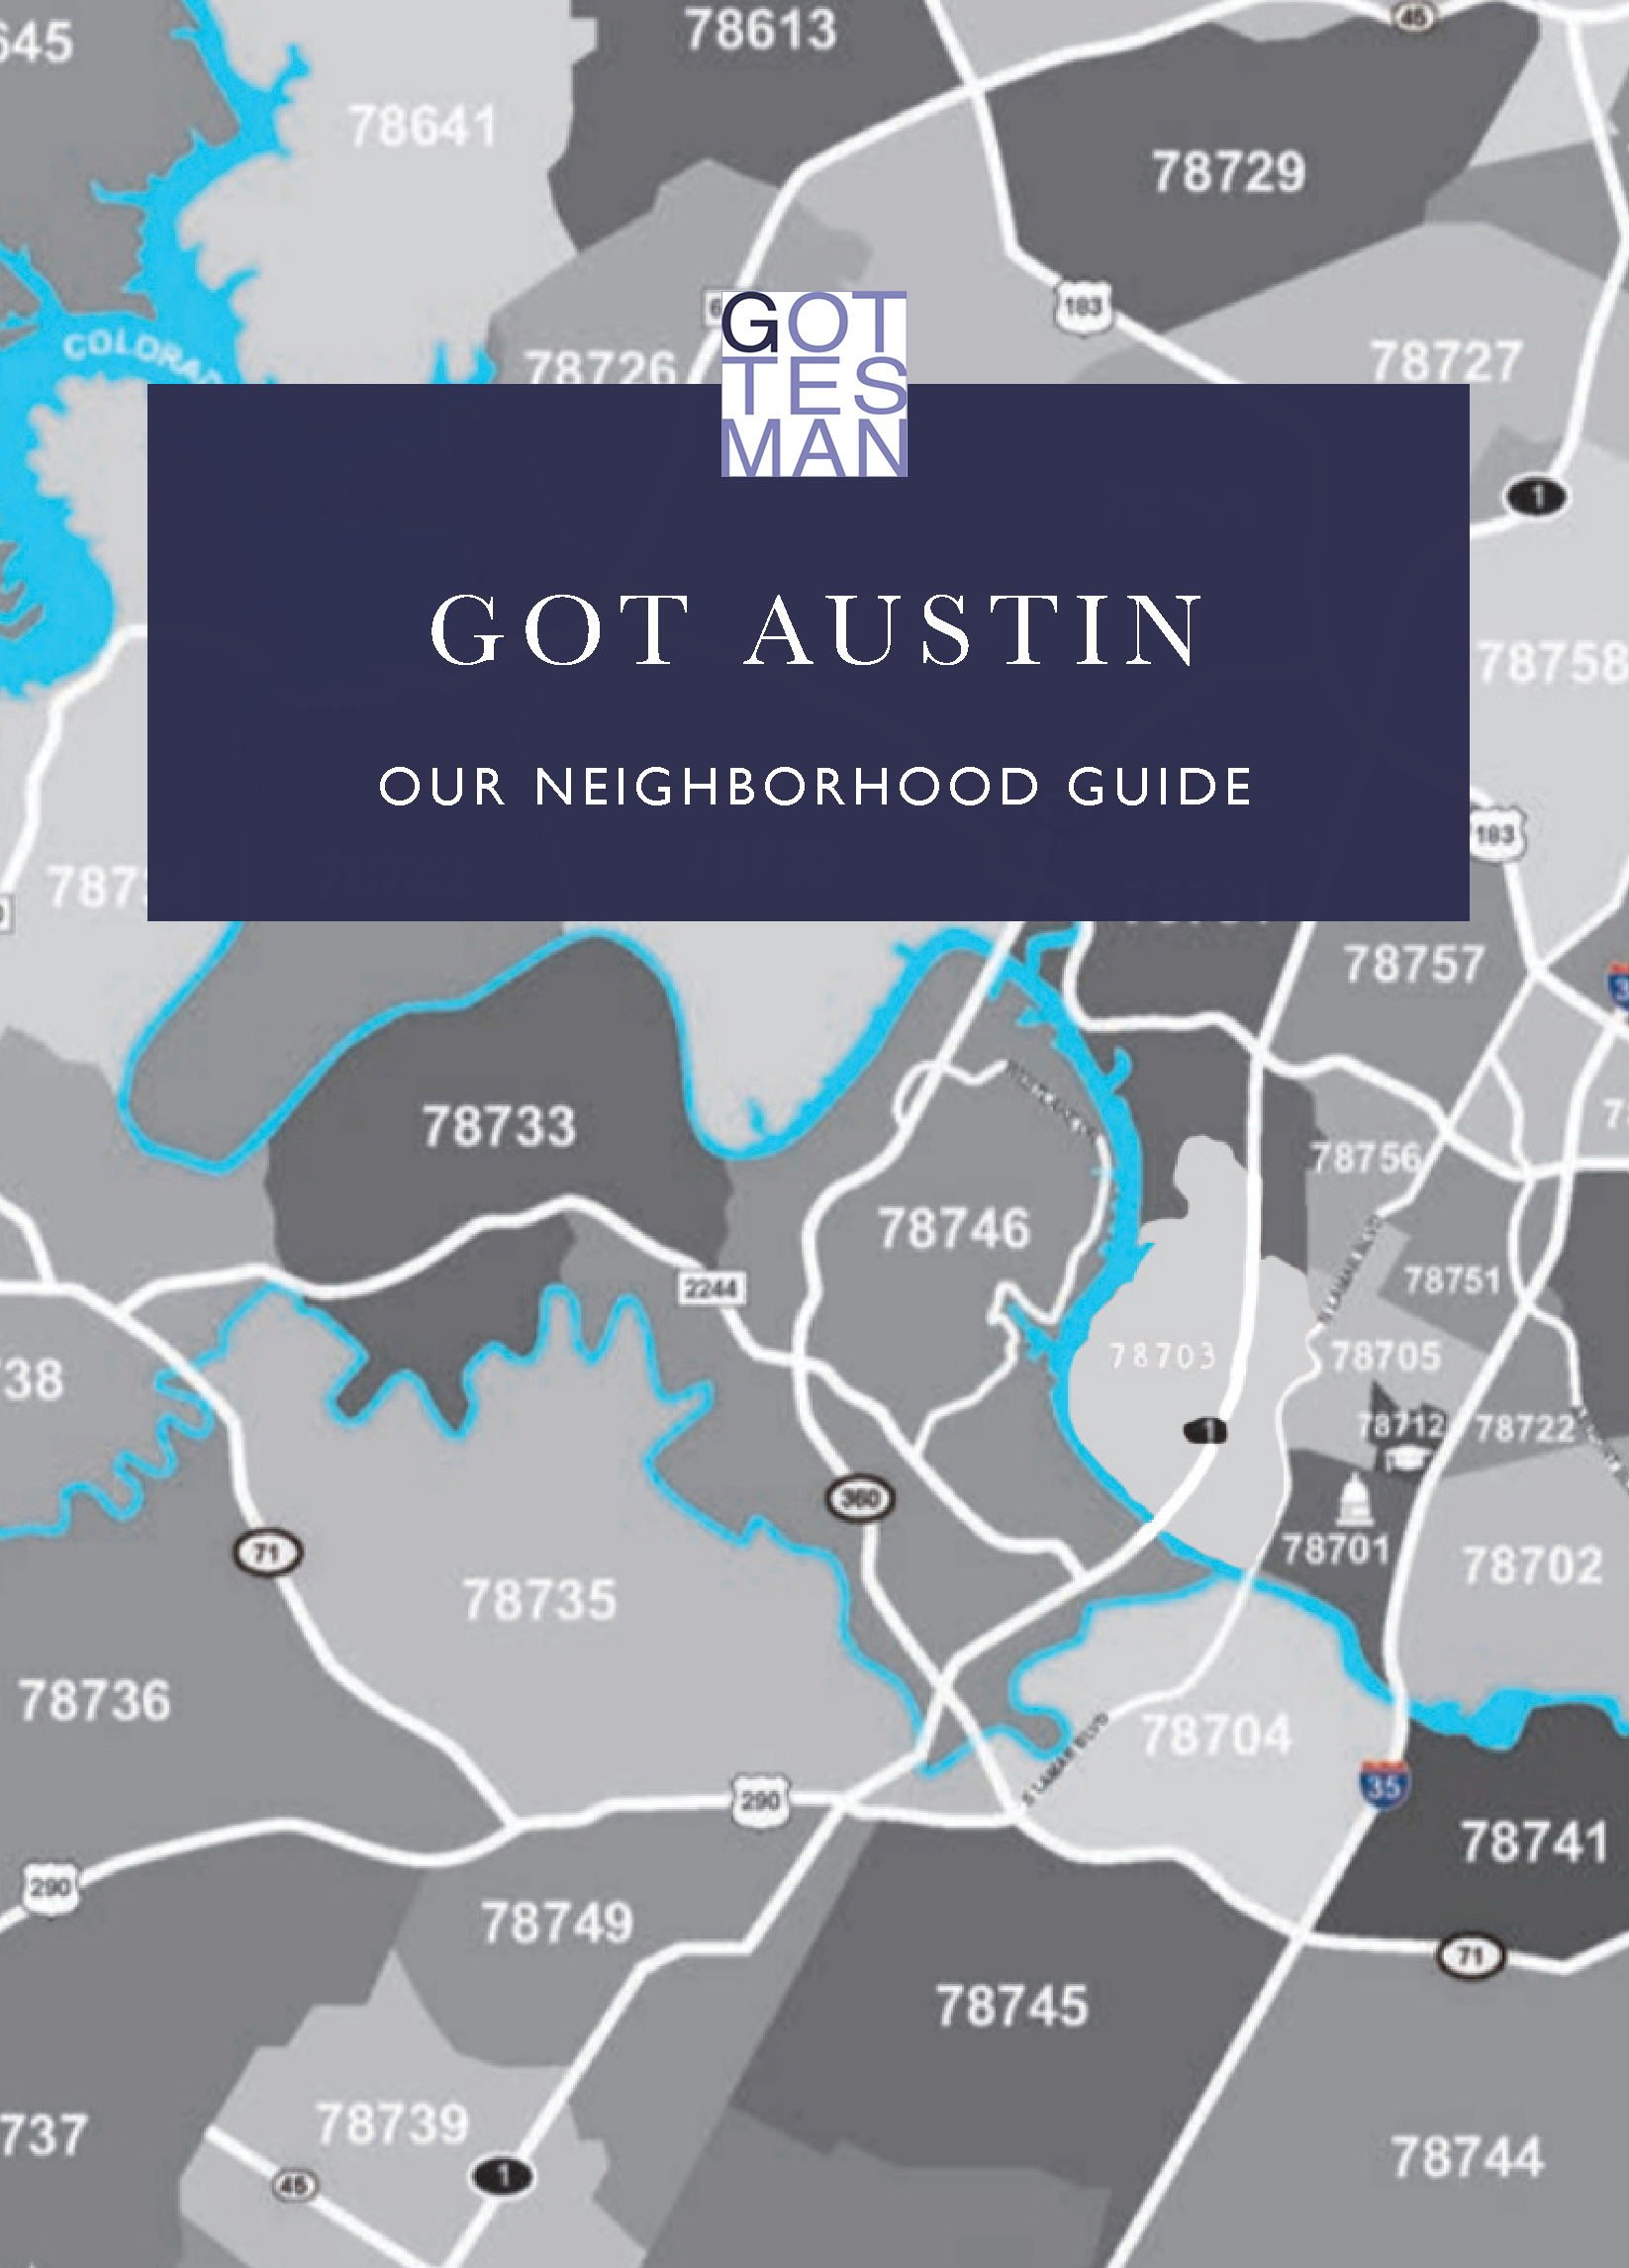 "Got Austin: Our Neighborhood Guide"